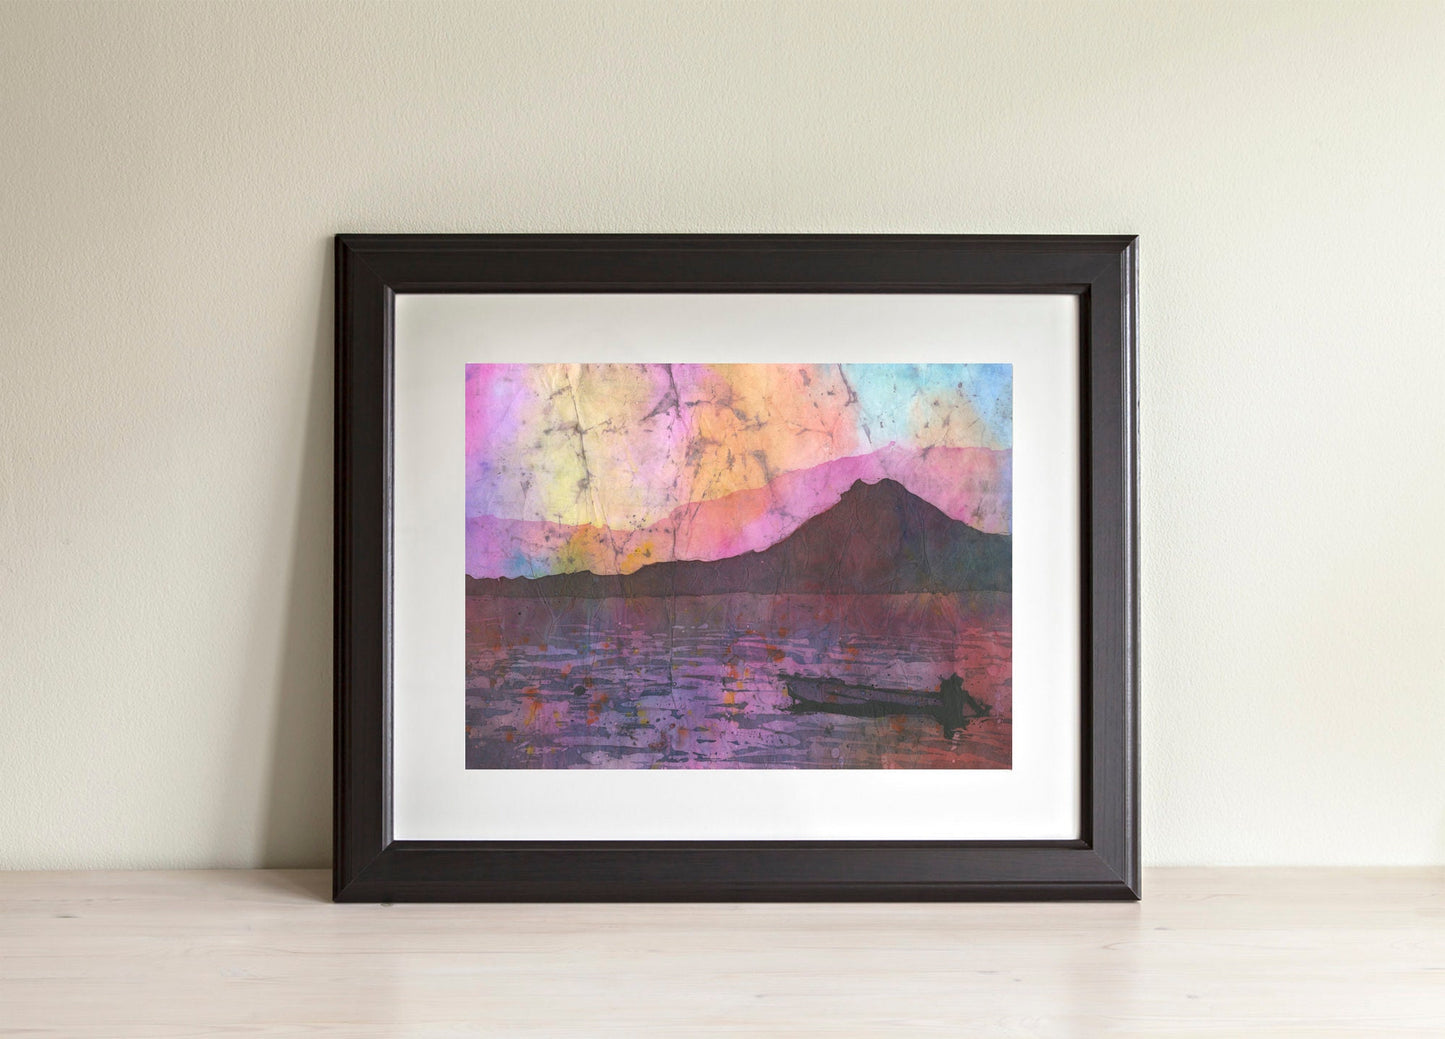 Boat at sunset on lake.  Batik painting of boat and volcano at Lake Atitlan, Guatemala.  Colorful watercolor landscape art volcano artwork (print)